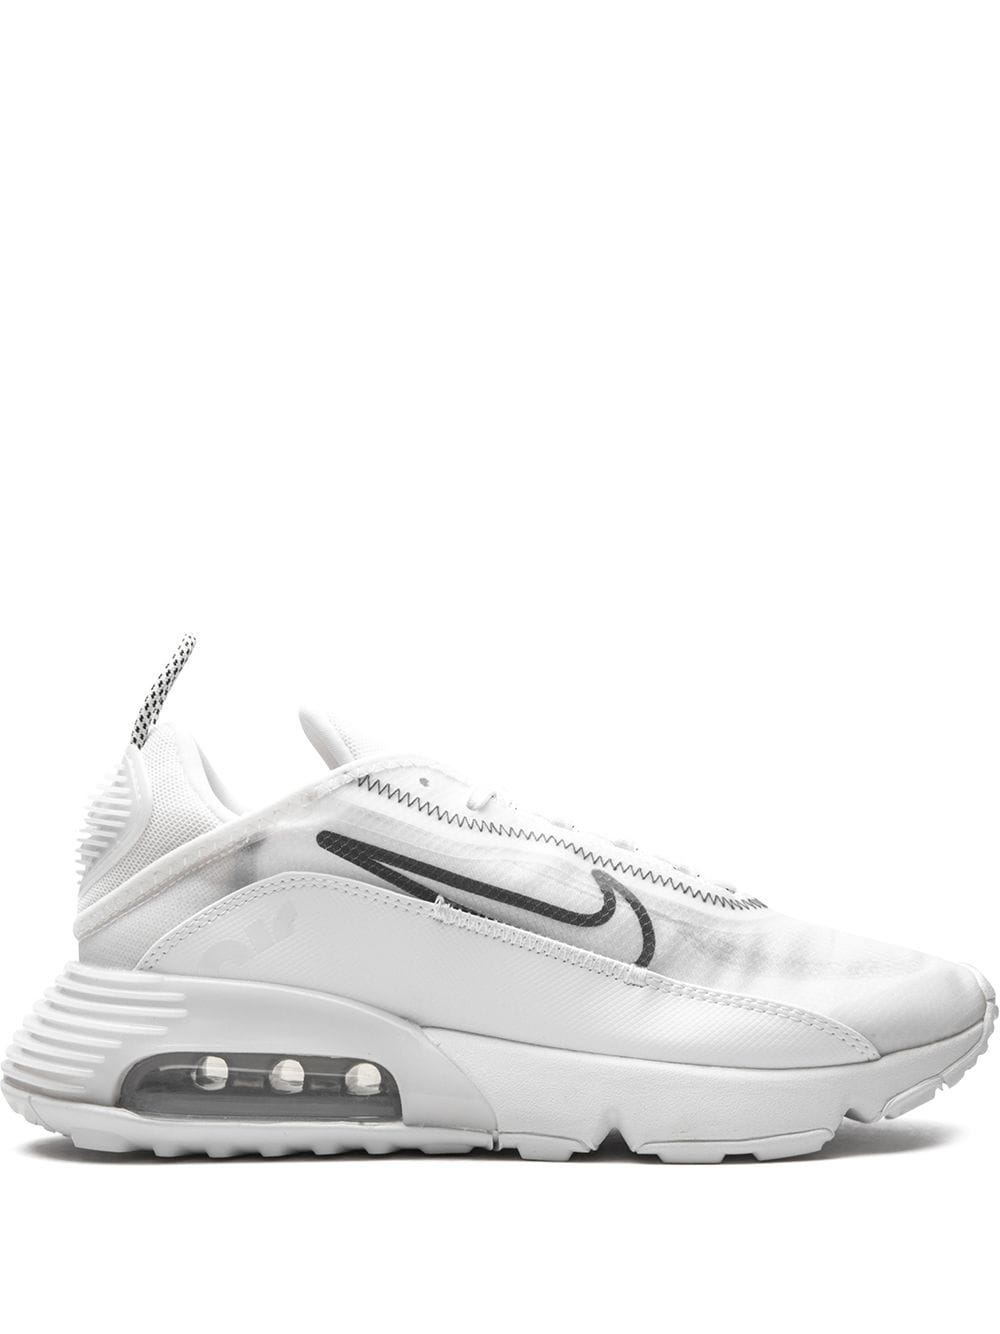 Shop Nike Air Max 2090 "white/black" Sneakers